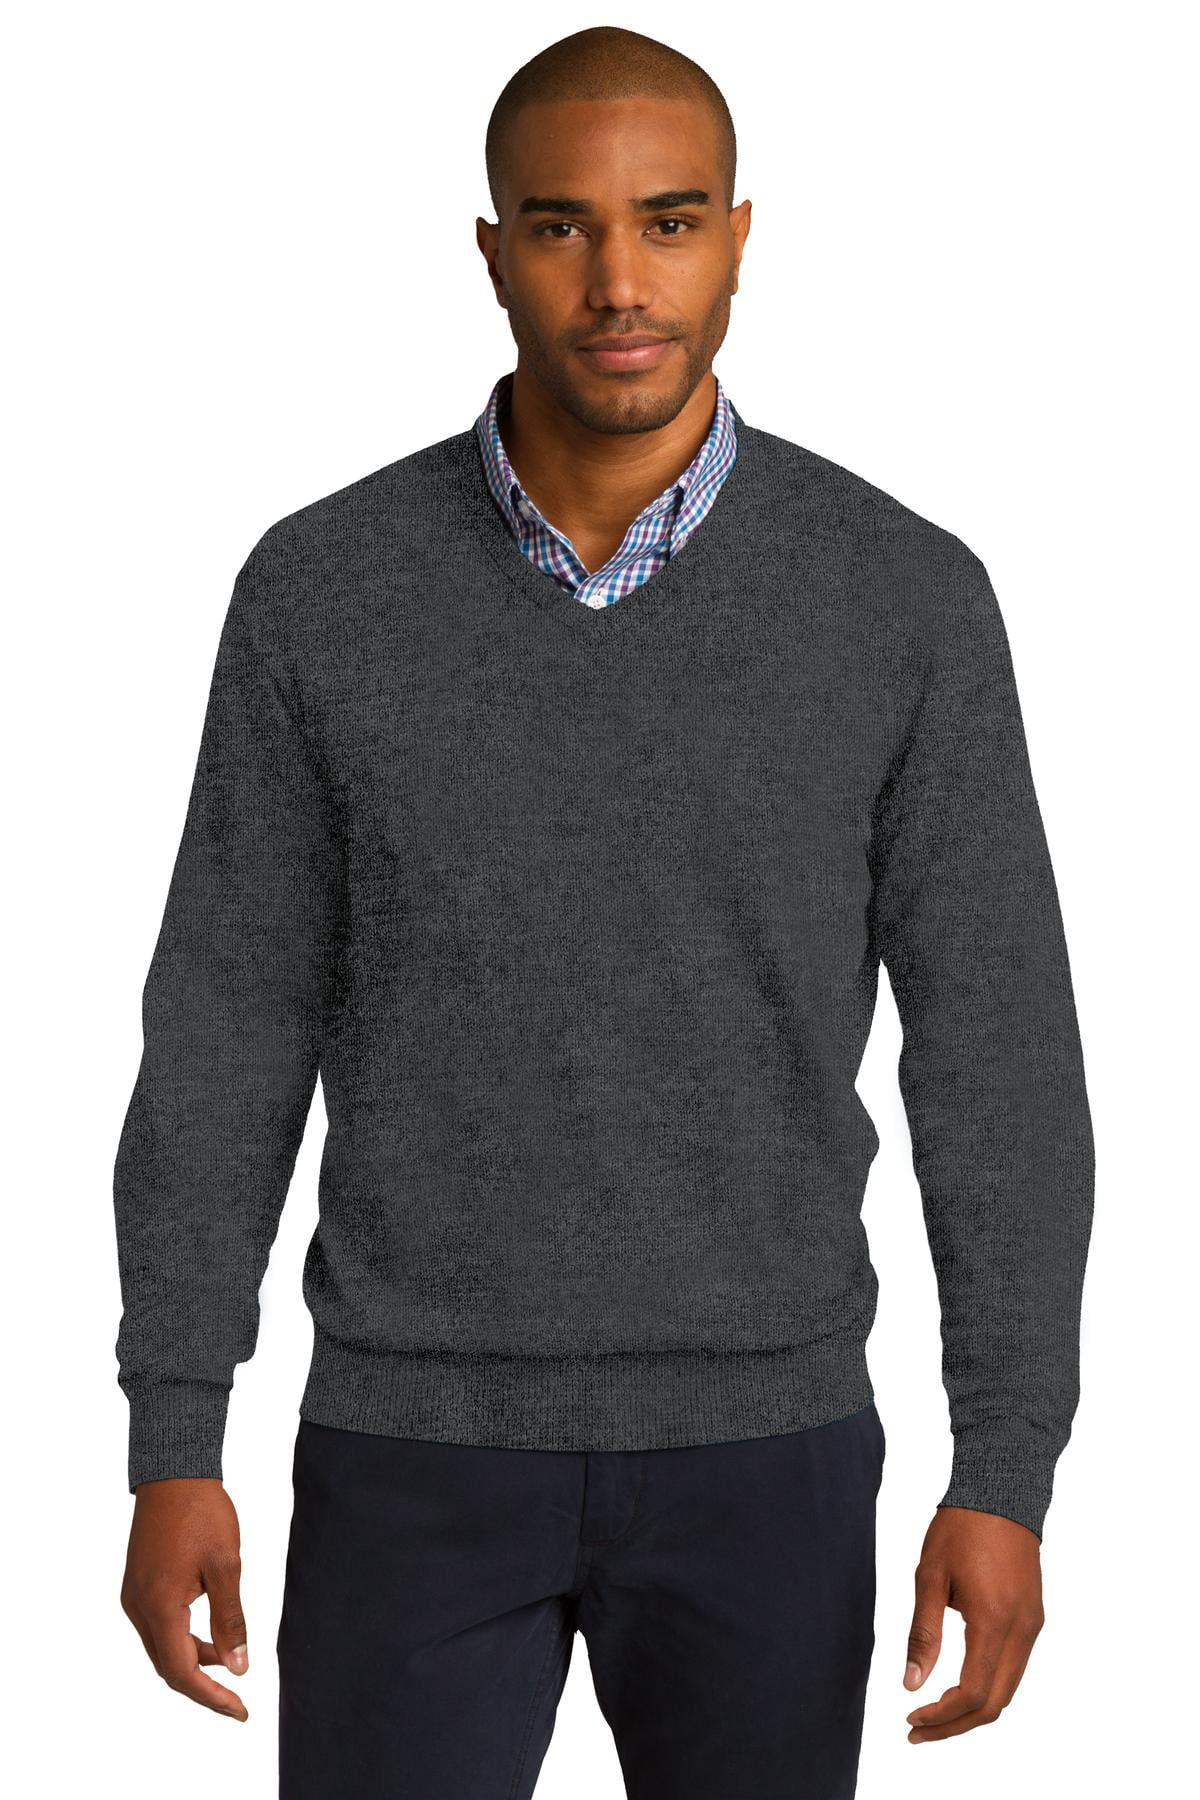 Port Authority Mens Value V Neck Sweater